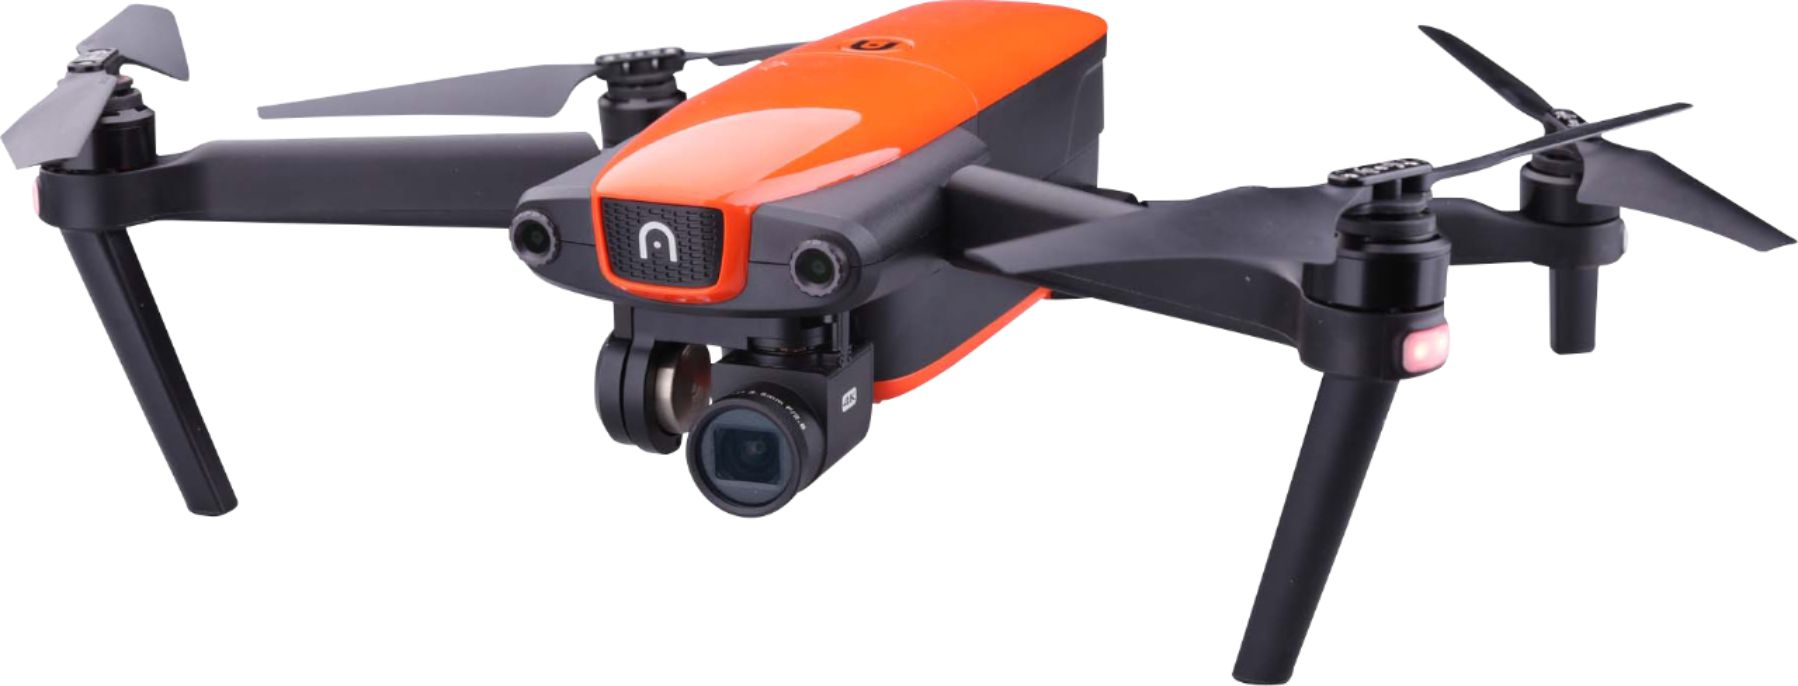 Left View: Autel Robotics - EVO 4K Drone with Controller - Orange